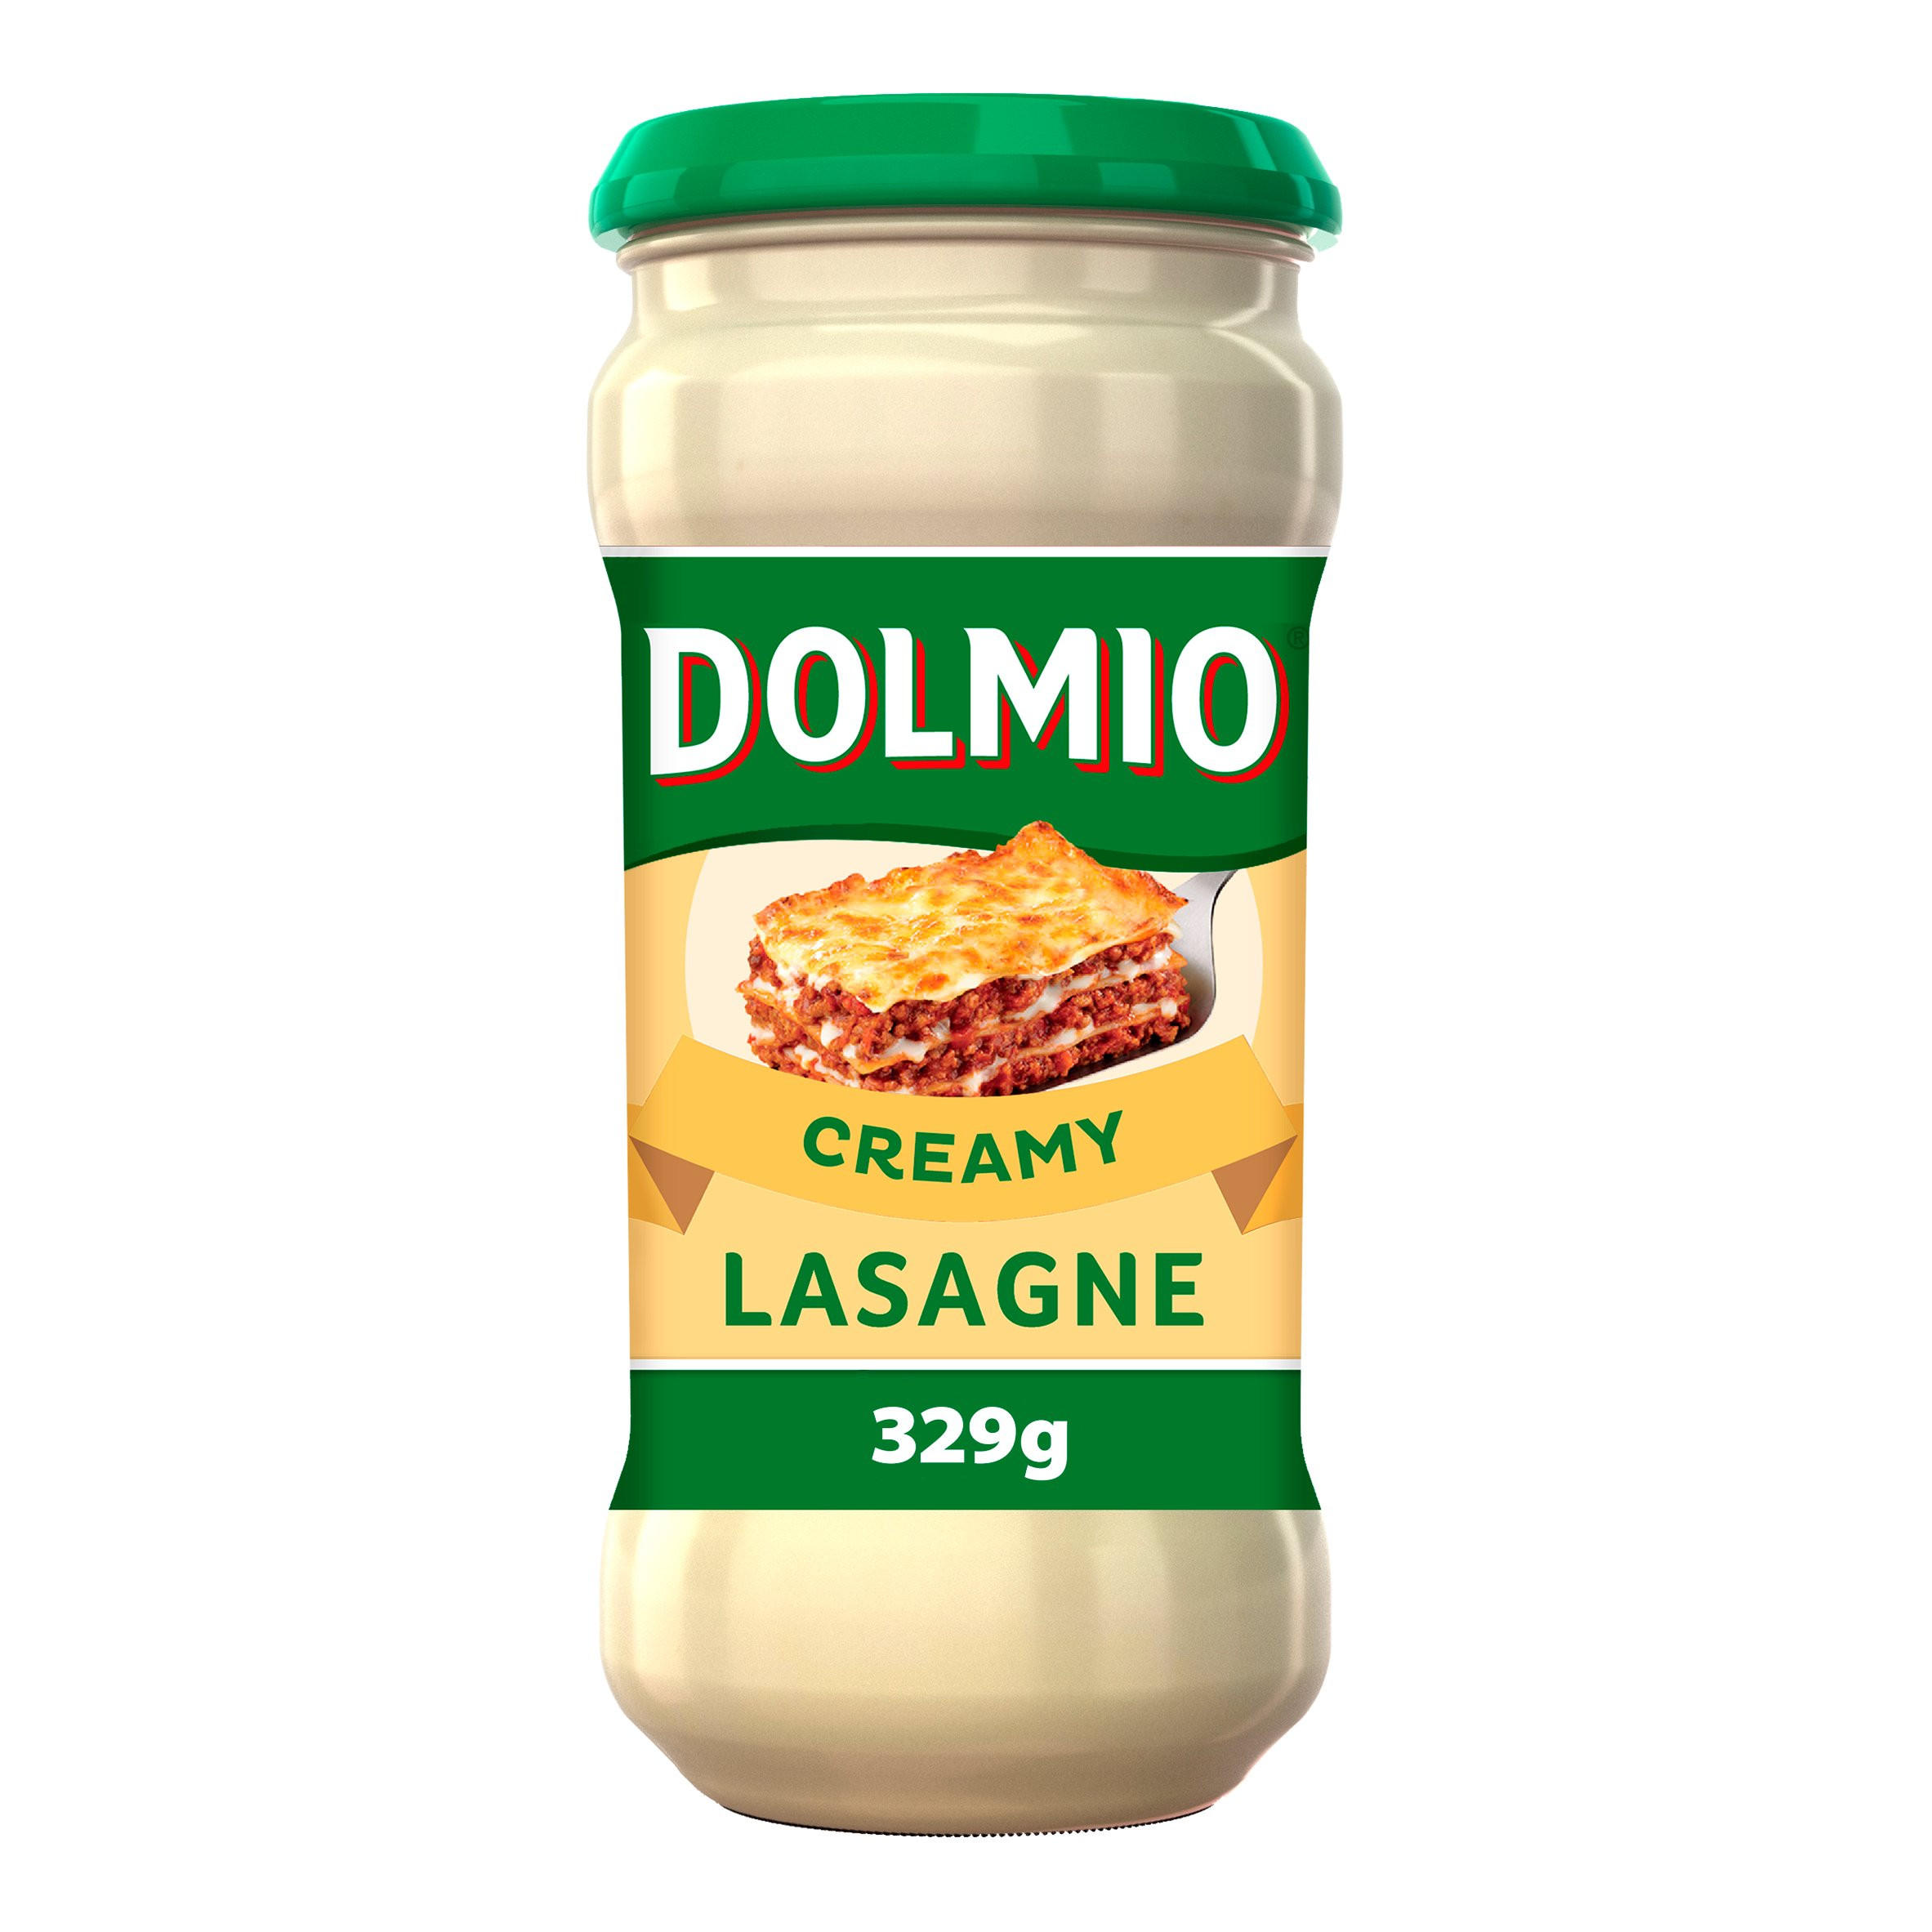 Dolmio Lasagne Creamy White Sauce 329g | Pasta Sauces | Iceland Foods